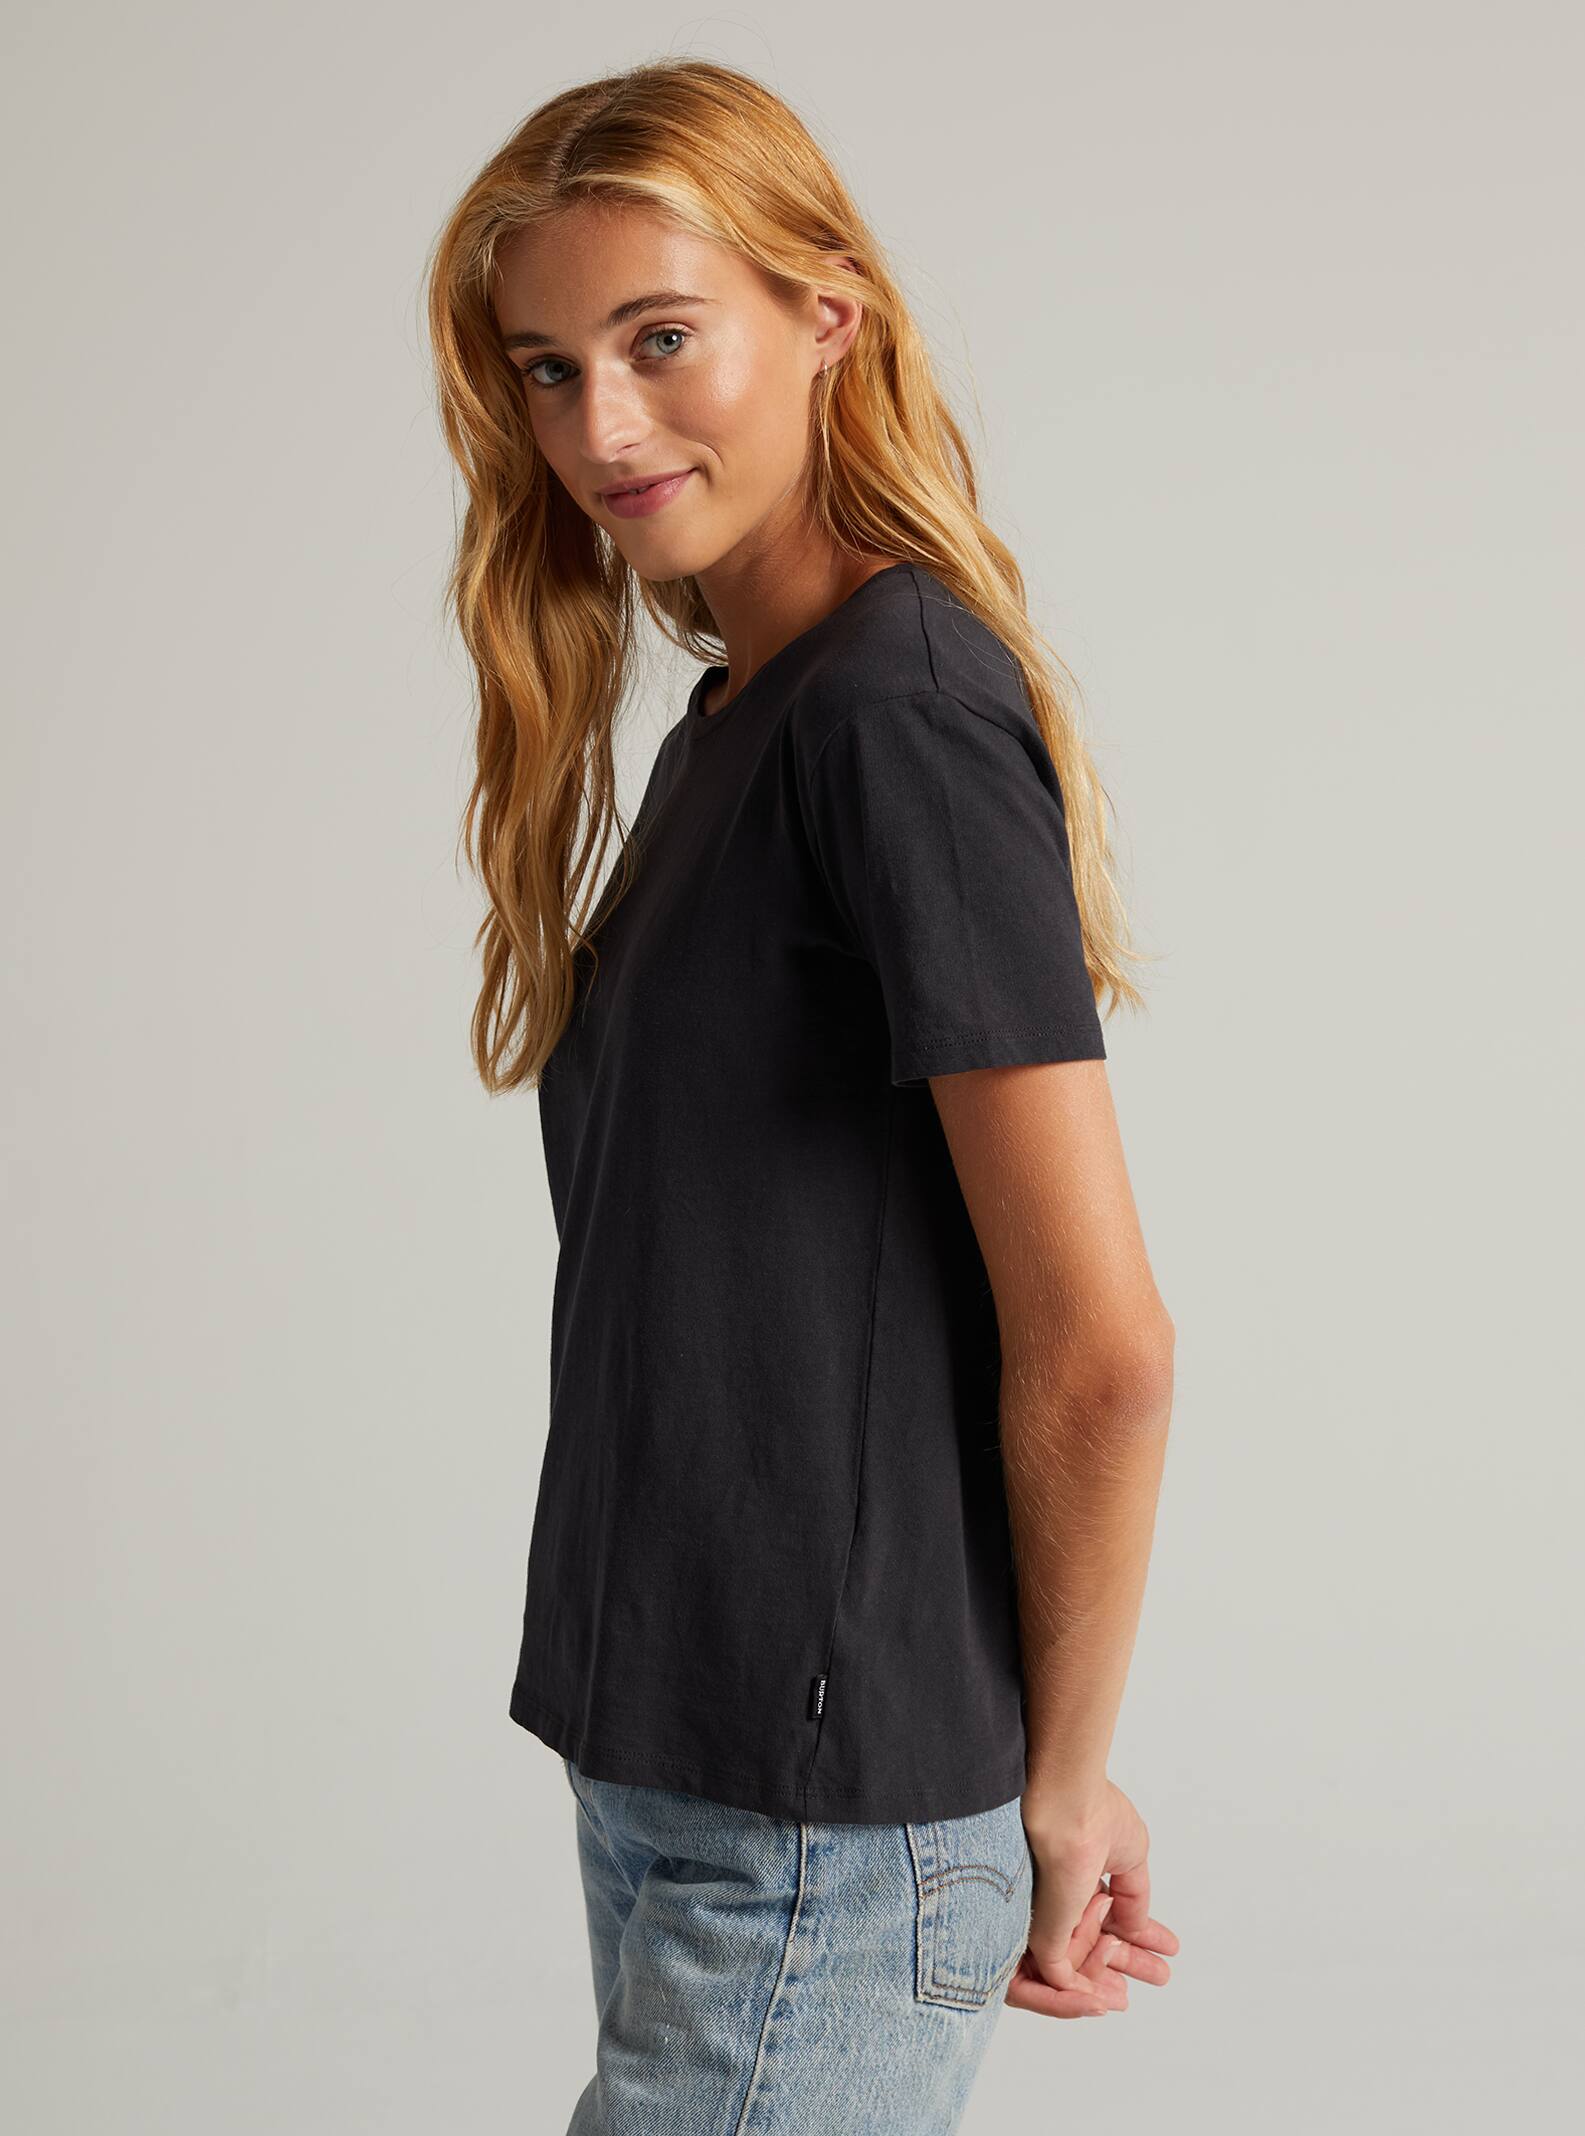 Burton Womens Classic Short Sleeve T-Shirt